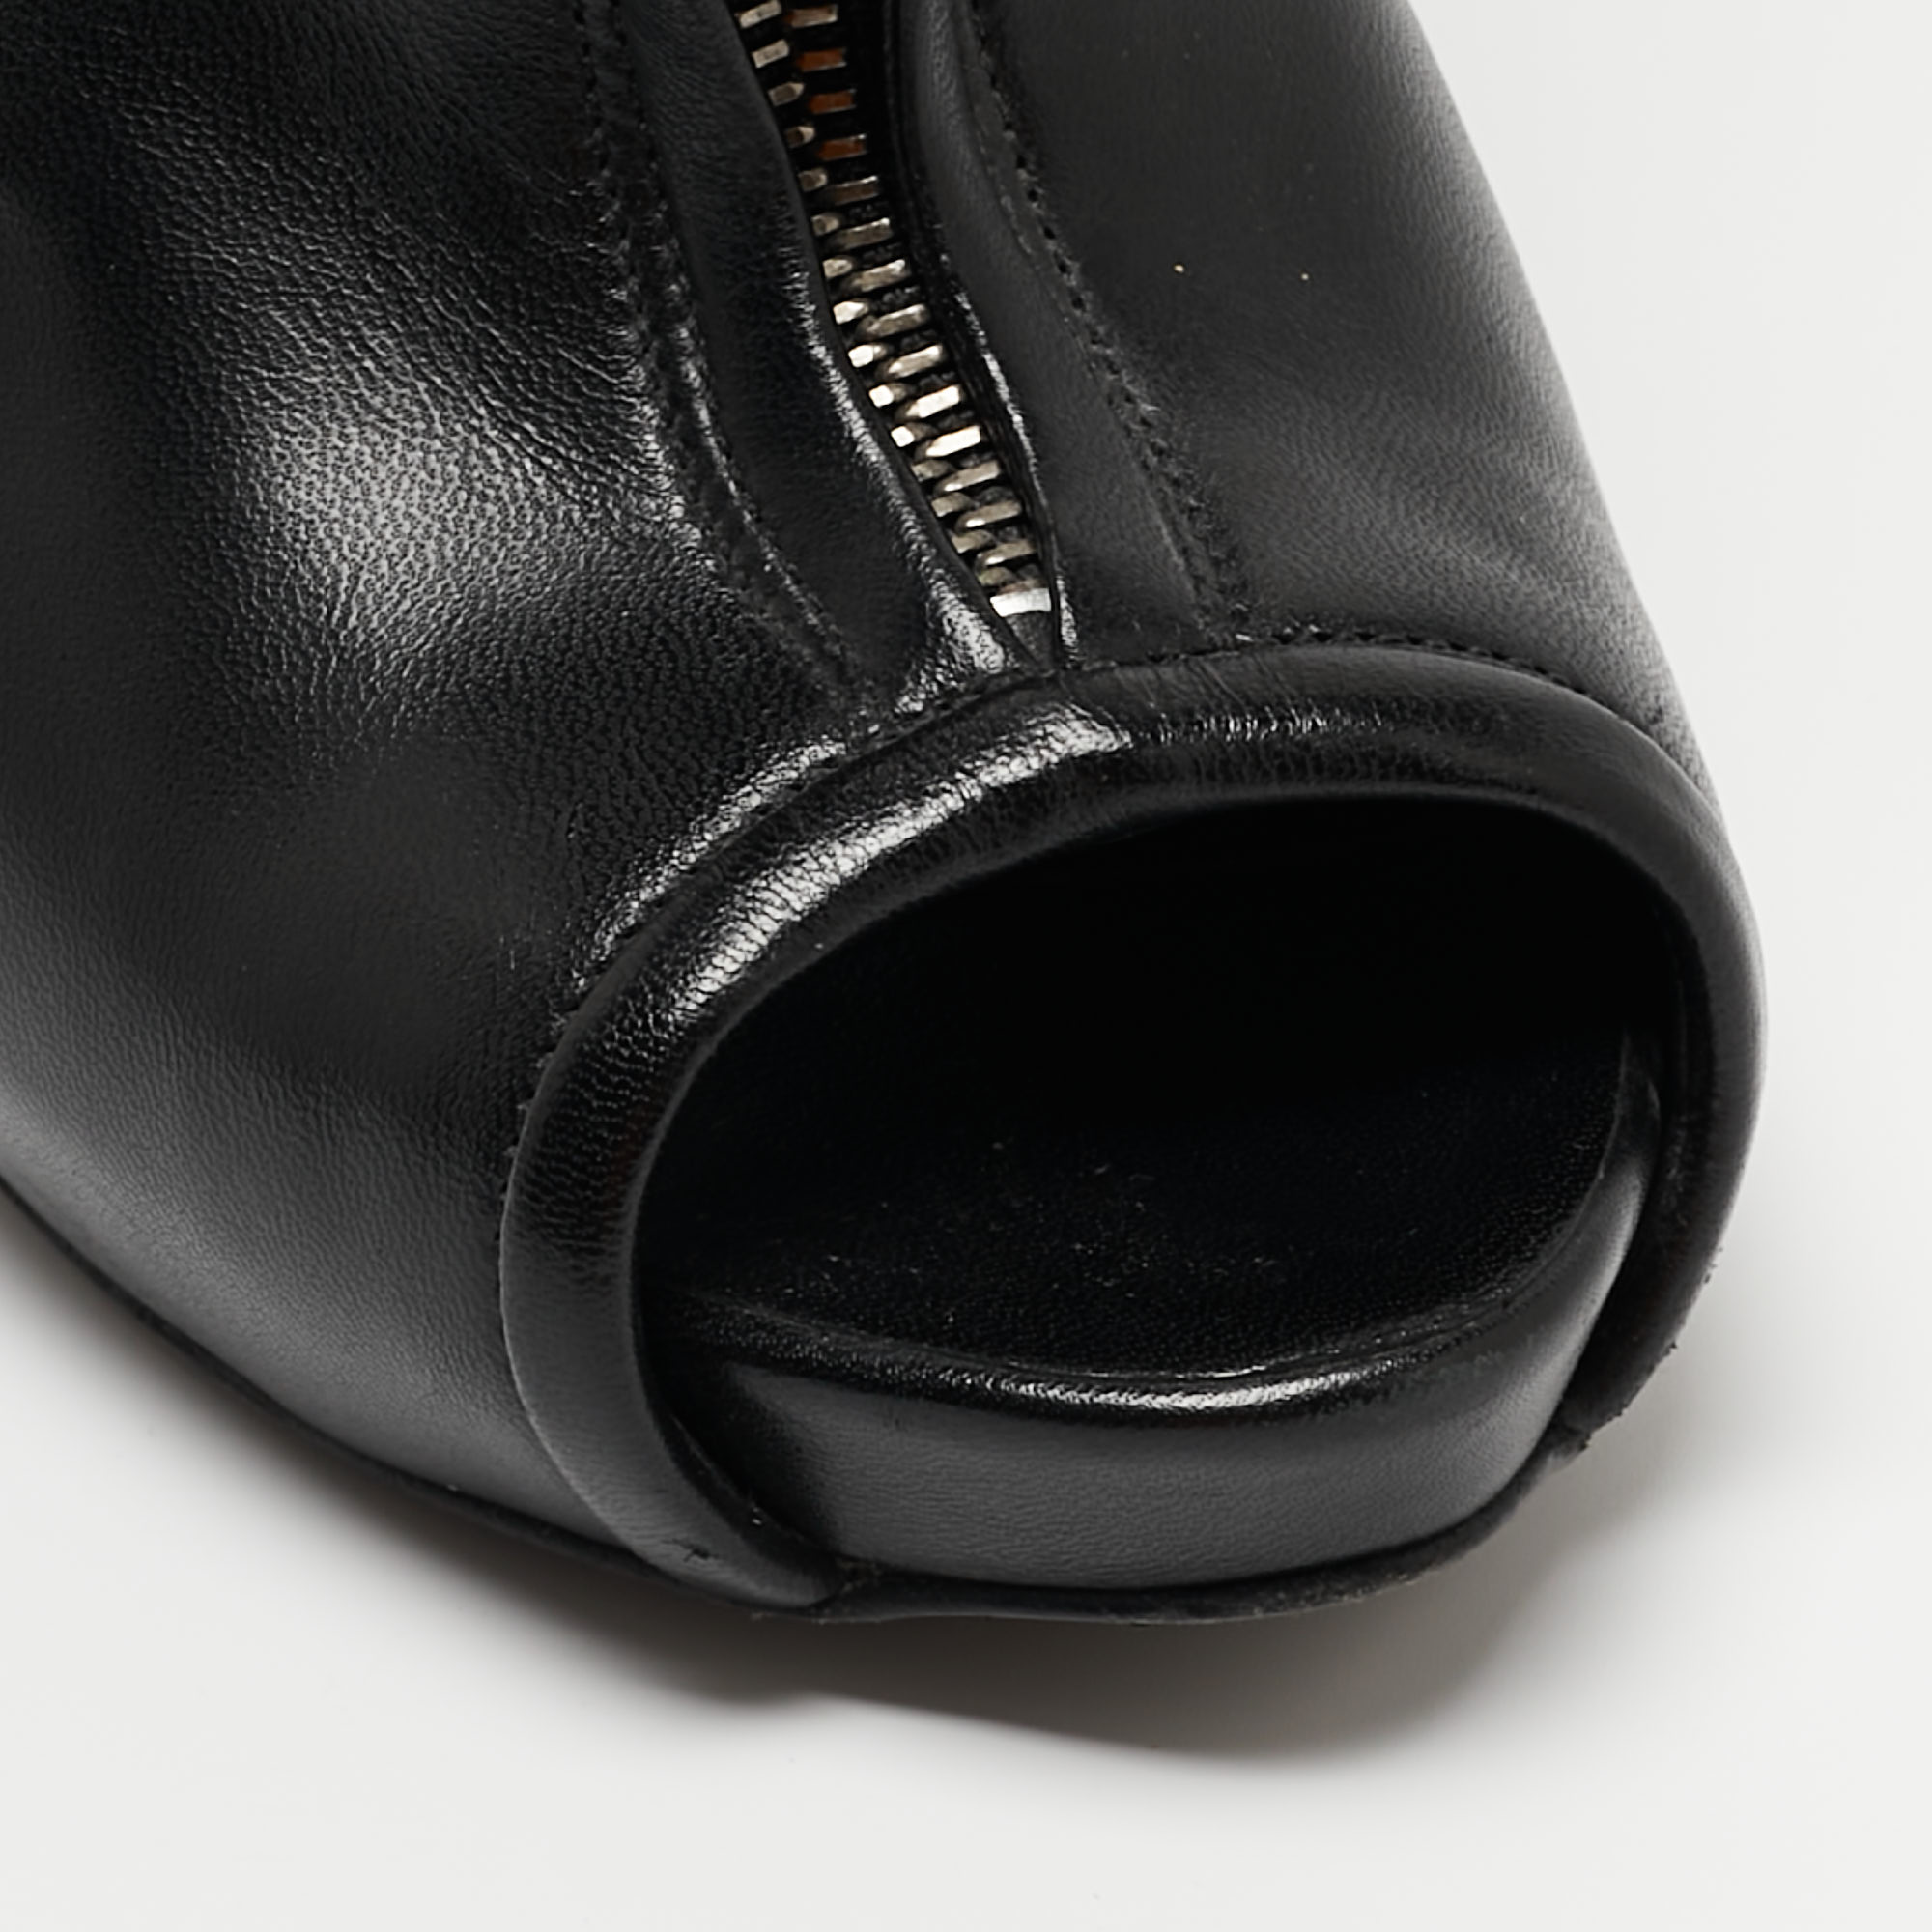 Alexander McQueen Black Leather Faithful Skull Peep Toe Ankle Boots Size 38.5